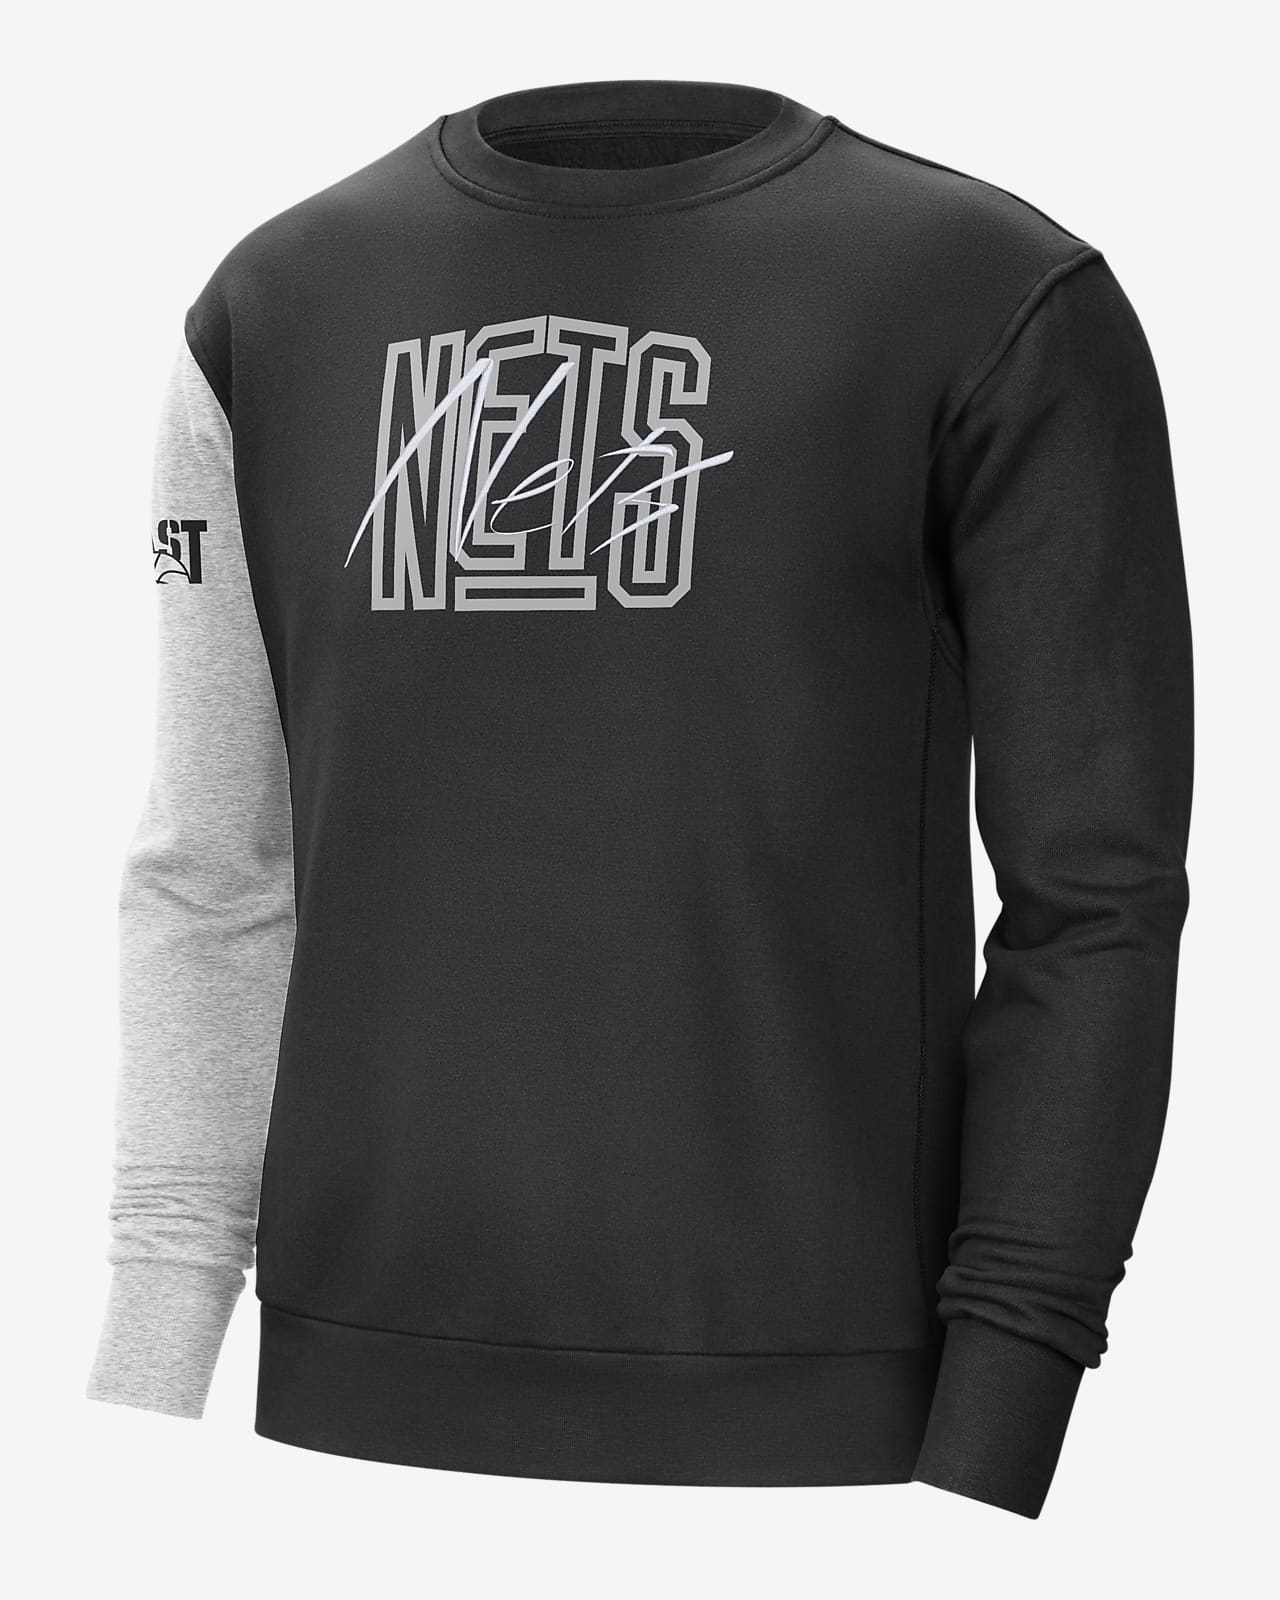 Brooklyn Nets Nike Short Sleeve Practice T-Shirt - Black - Mens